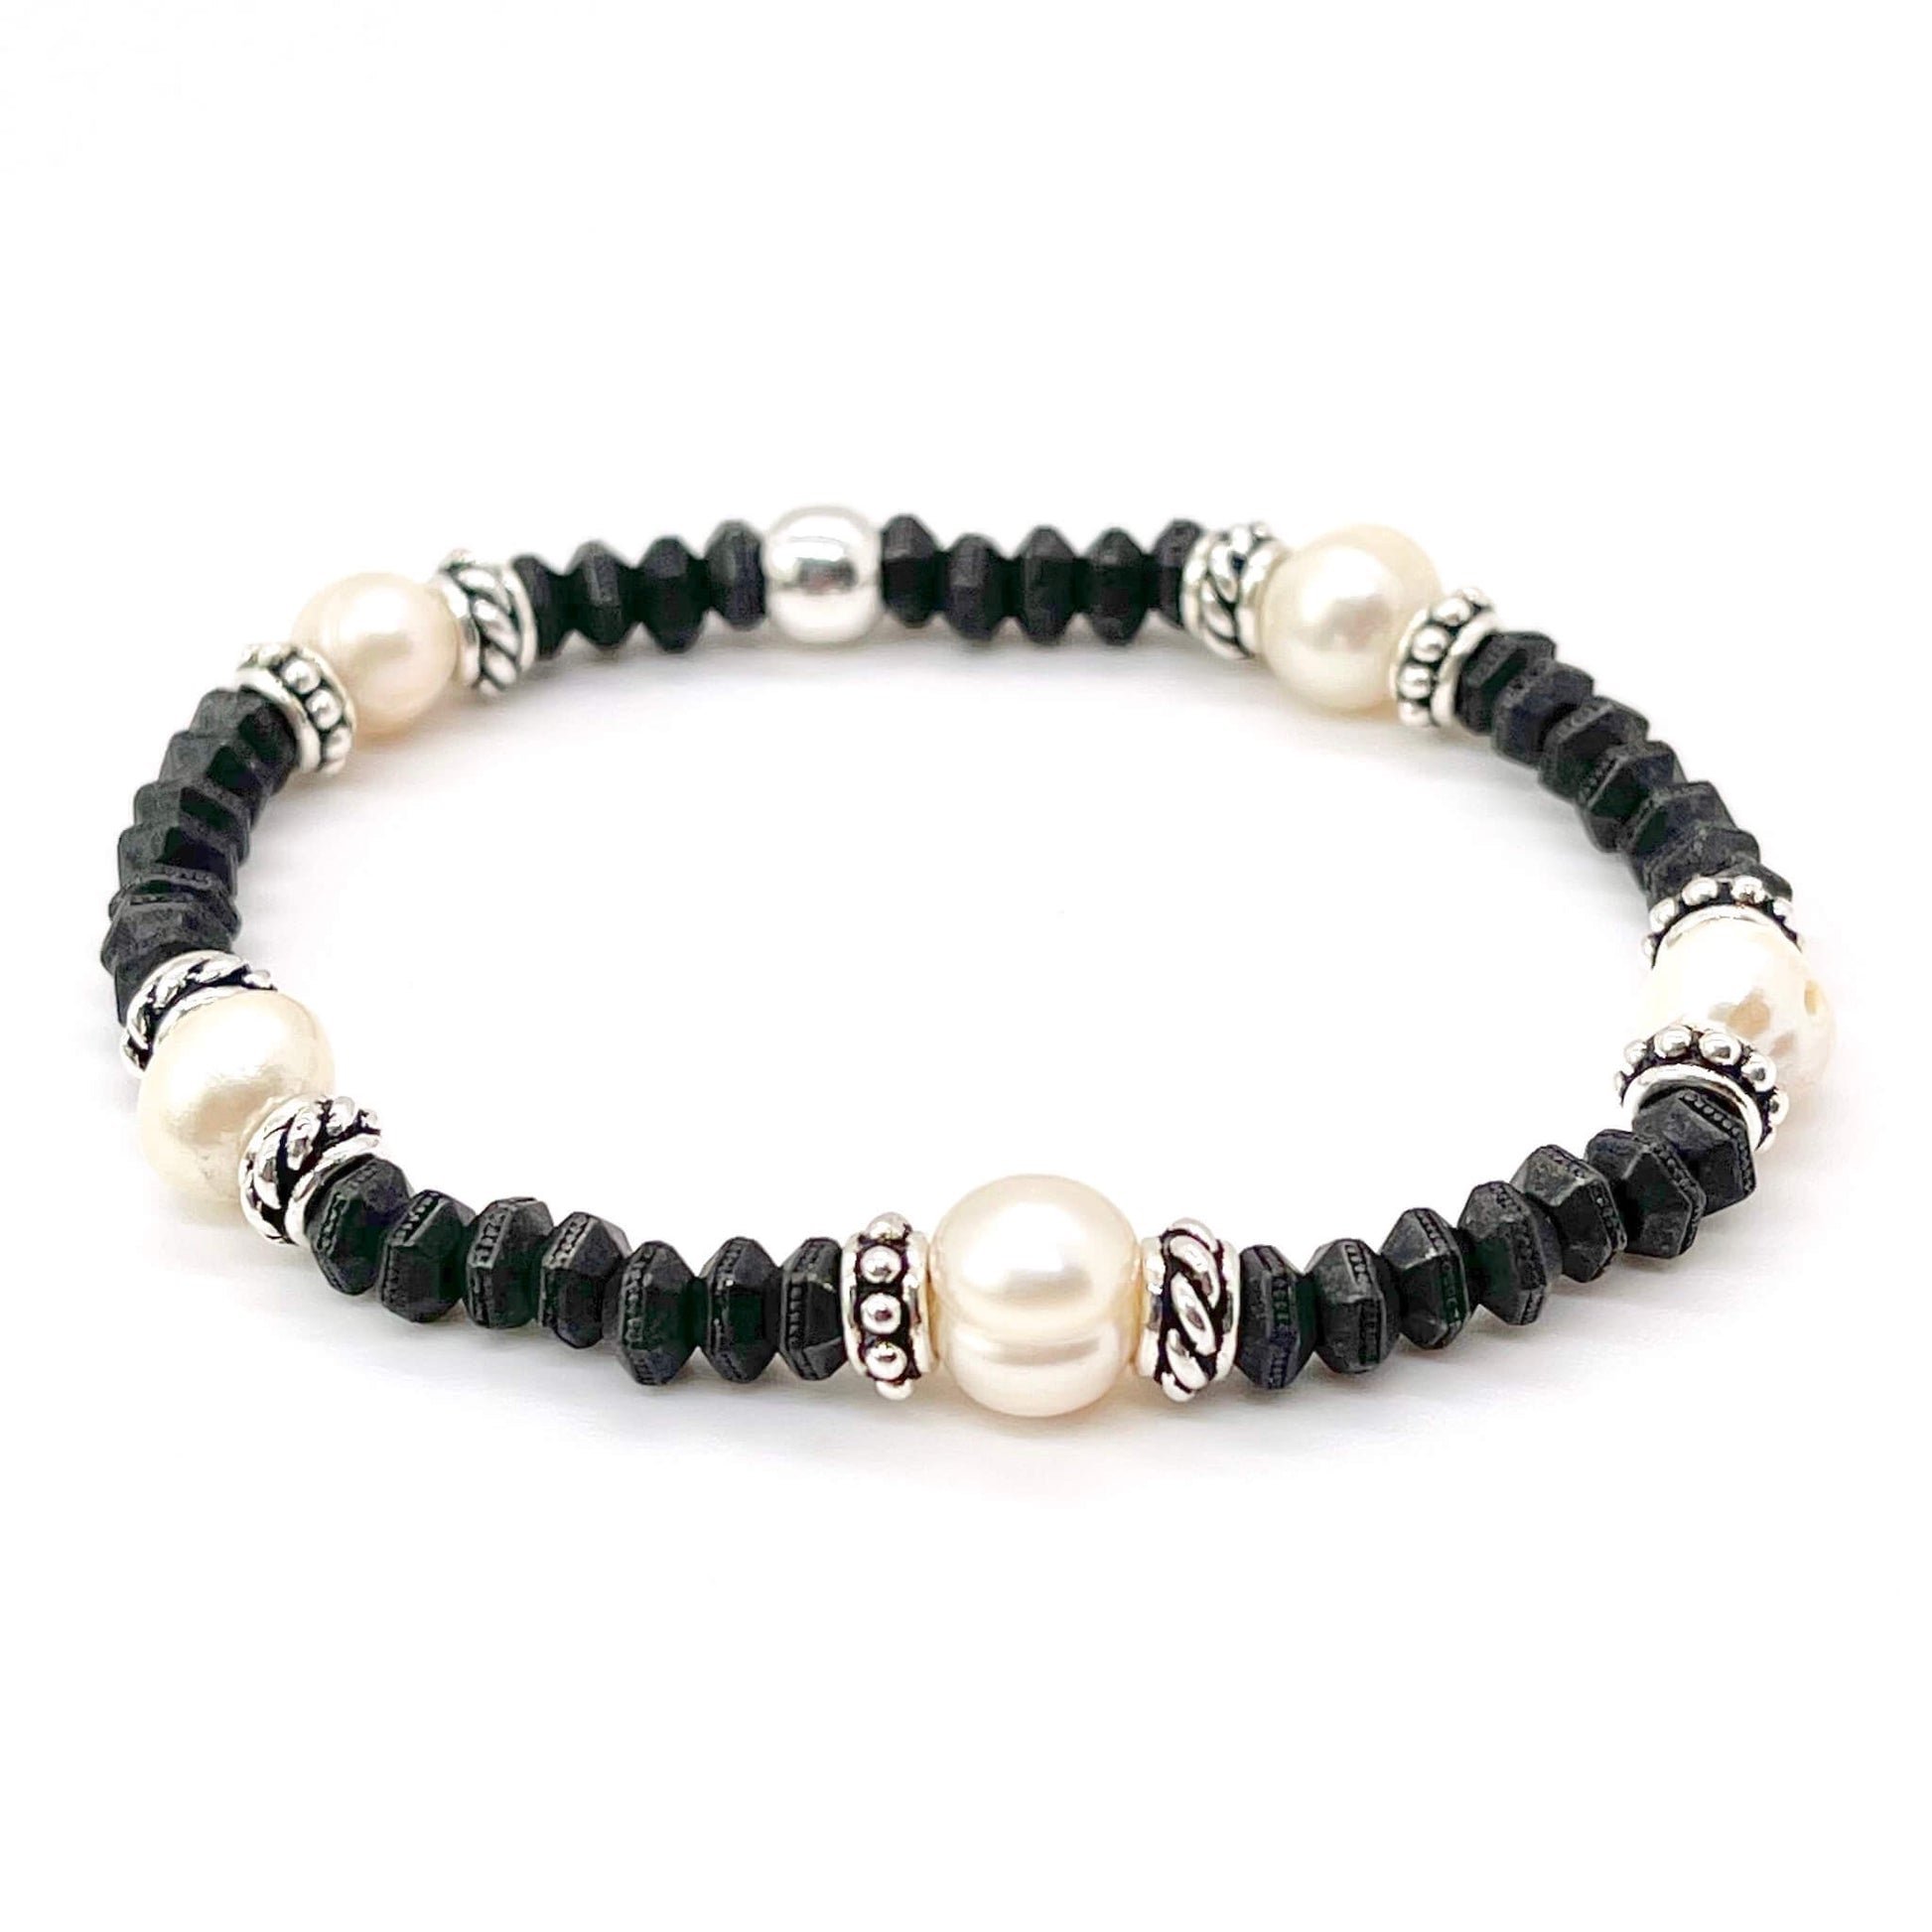 Black pearl bracelet for men. Freshwater pearls, black pewtwer hexagon beads. Silver-plated disks. Stretch bracelet.